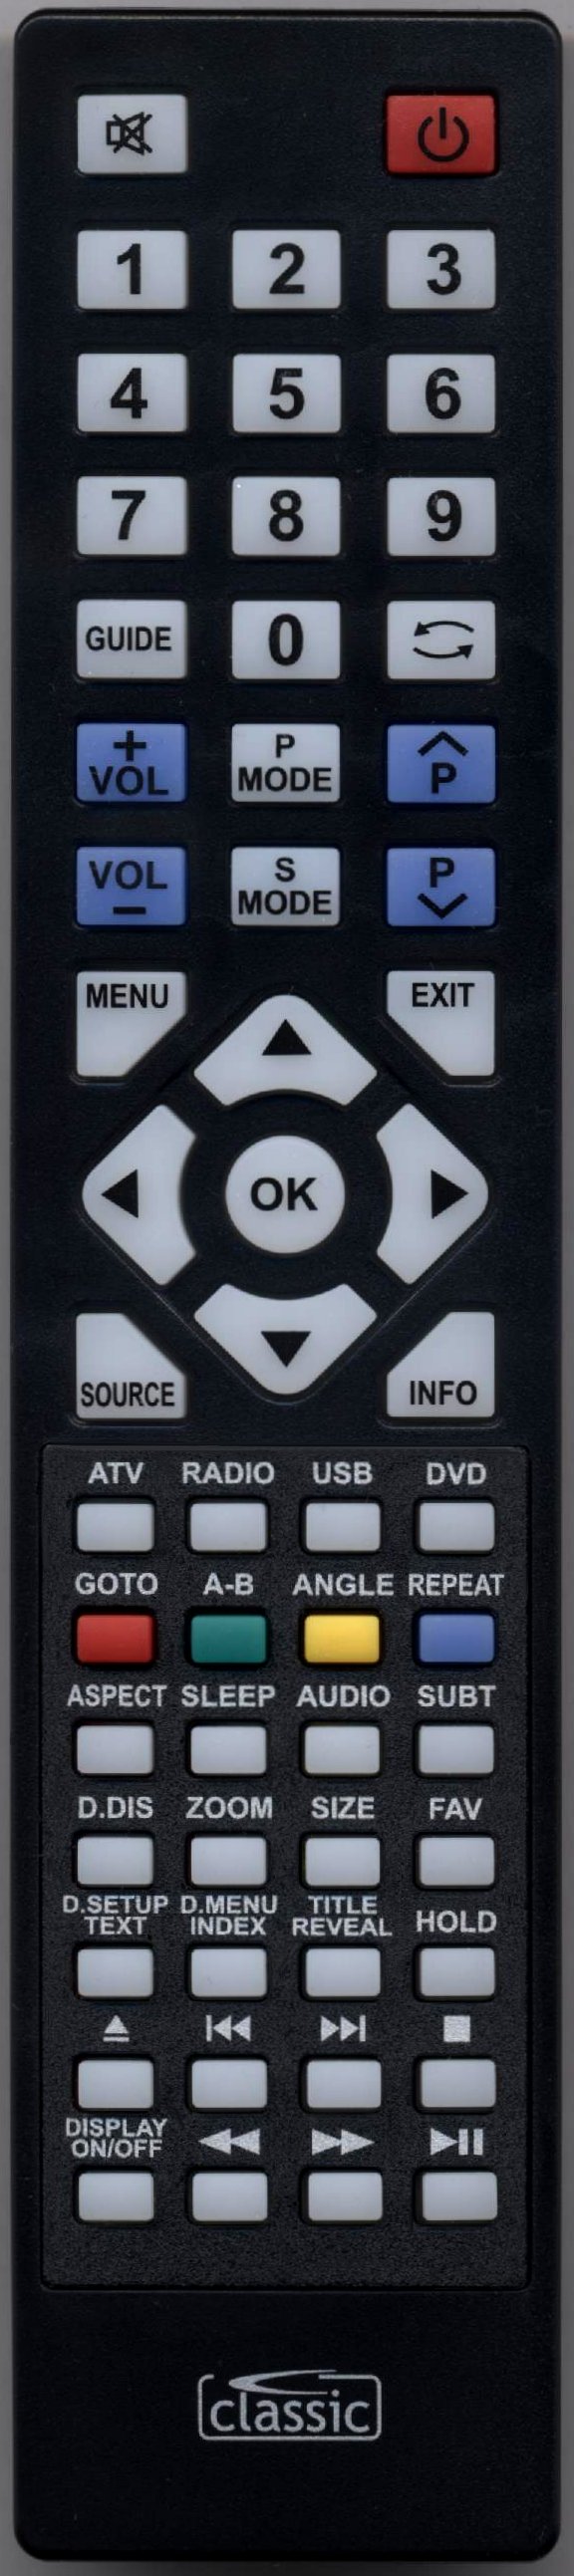 UMC X18554GGWTCDUUK Remote Control Alternative